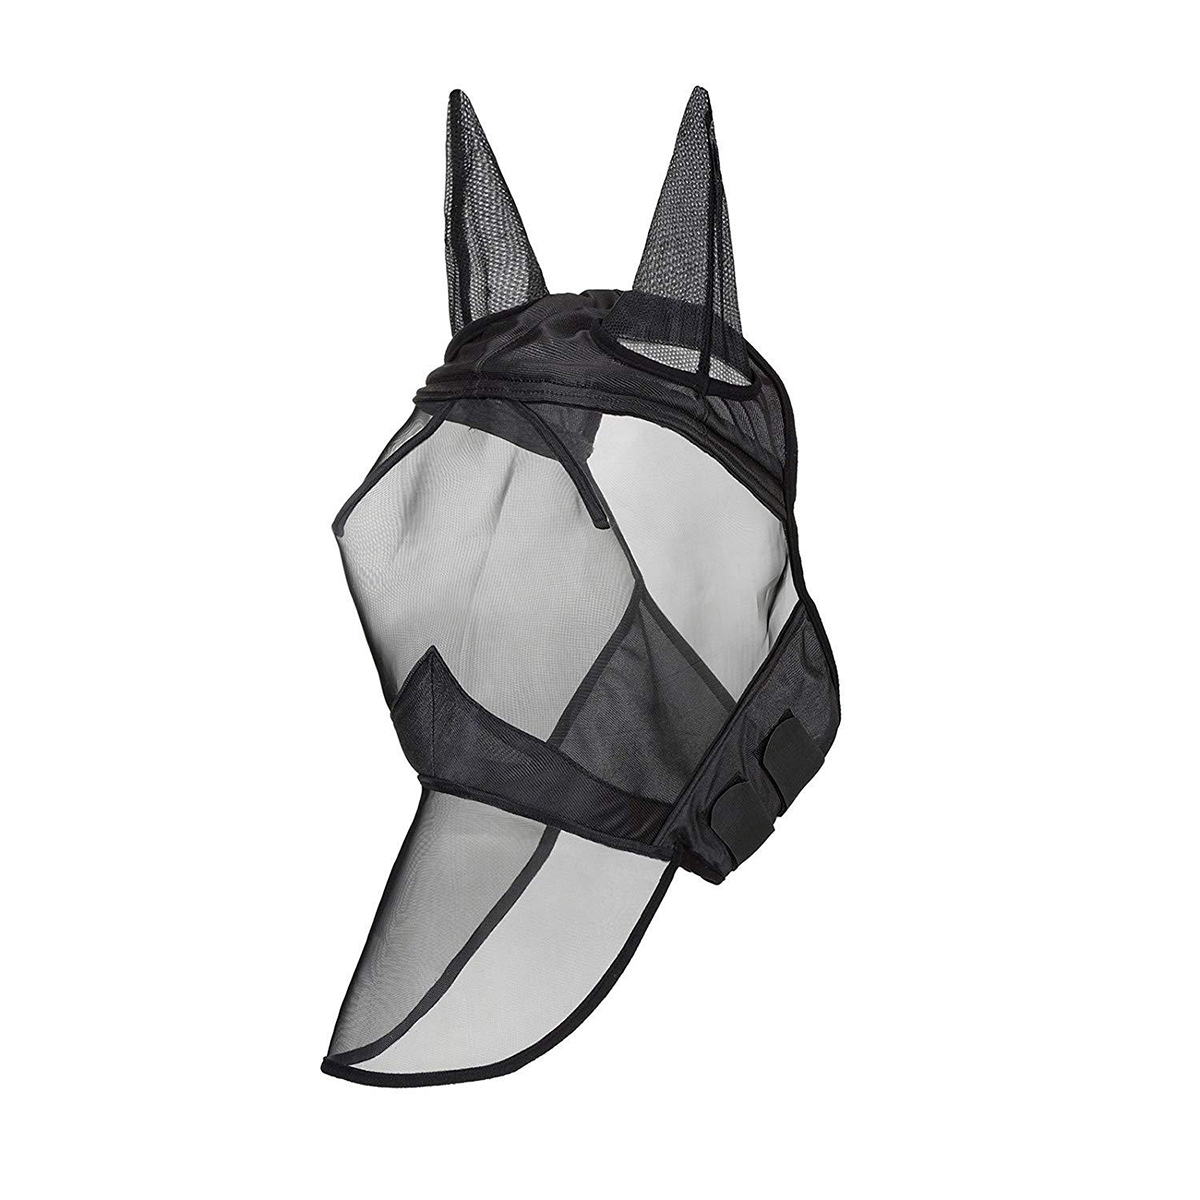 MLXL-Breathable-Horse-Fly-Mask-Mesh-Ears-Nose-Full-Face-for-Horse-Equipment-1686733-6